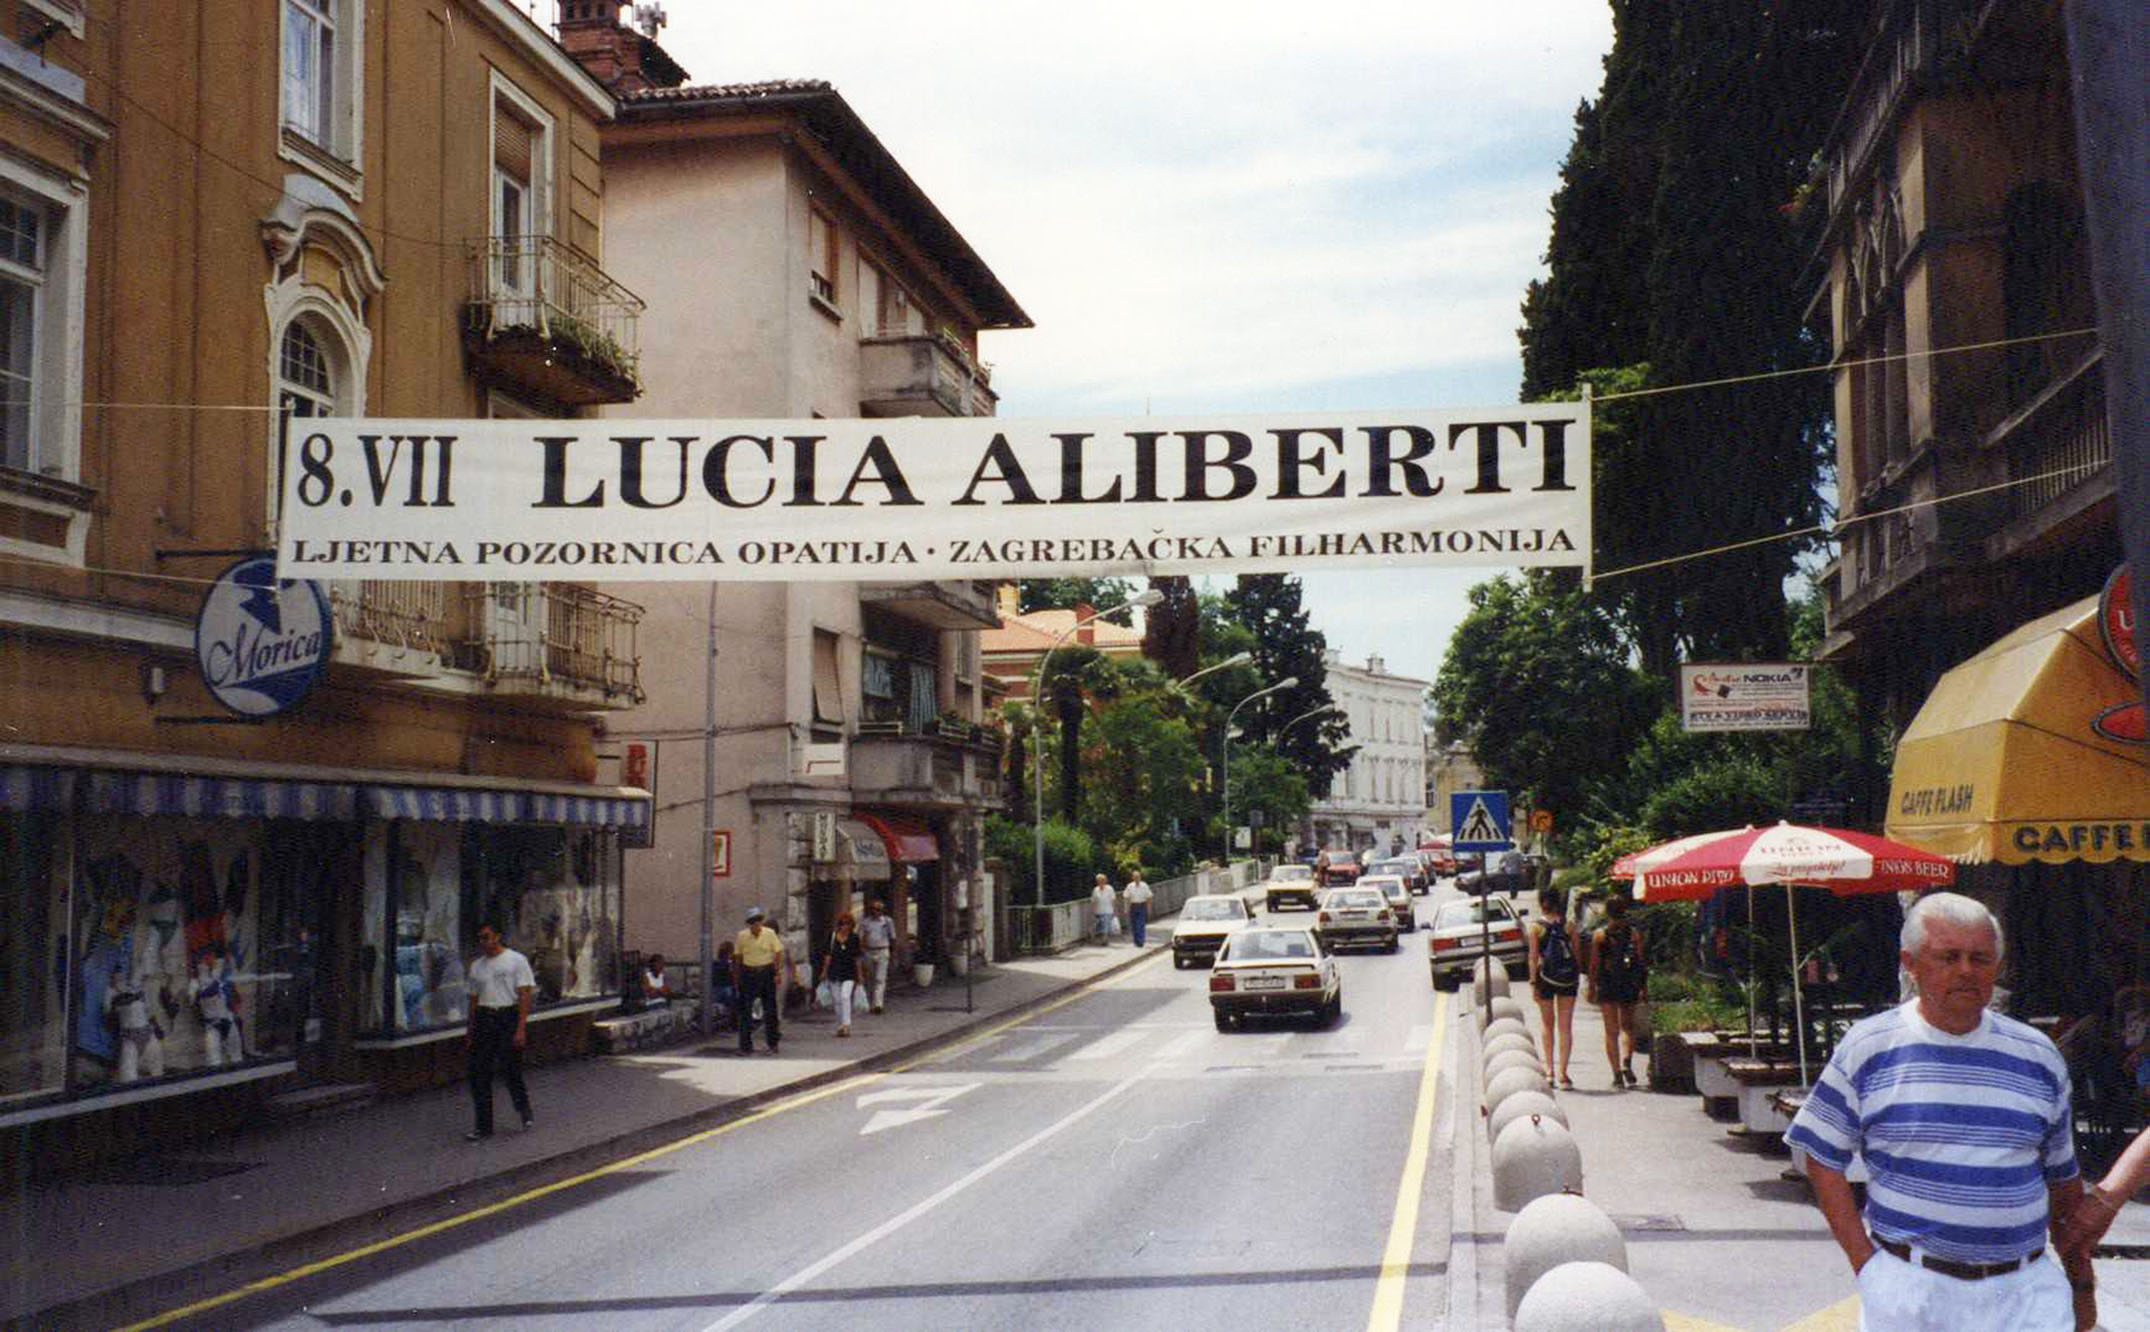 Lucia Aliberti⚘Special Concert⚘"Spring Festival in Opatija"⚘Opatija⚘Croatia Tour⚘:http://www.luciaaliberti.it #luciaaliberti #opatija #croatiatour #springfestival #concert